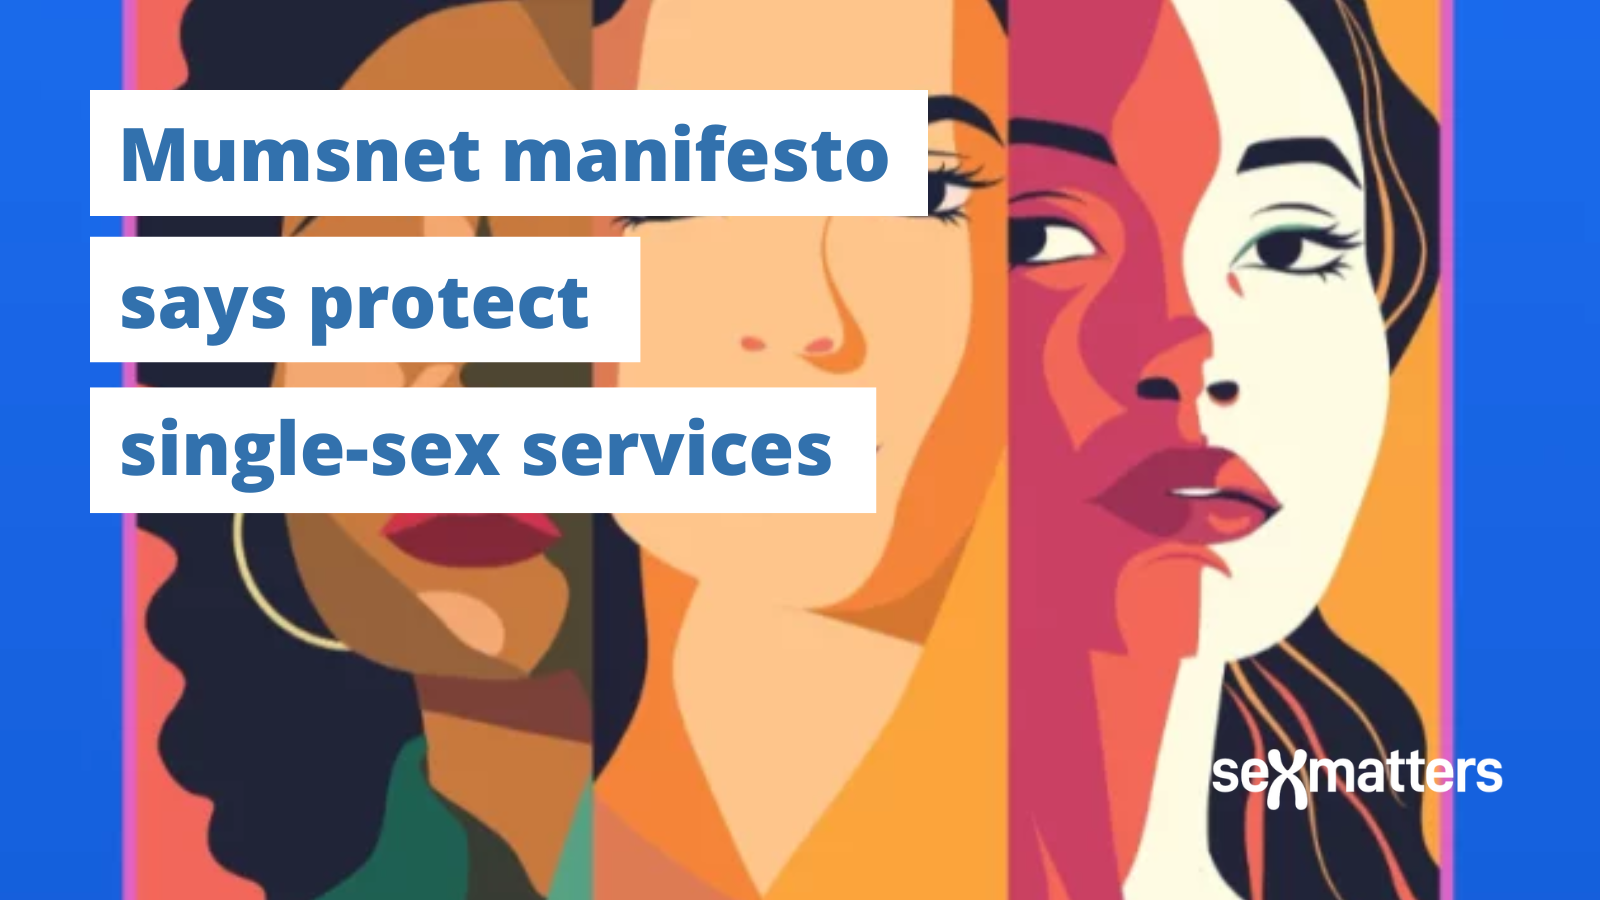 Mumsnet manifesto says protect single-sex services